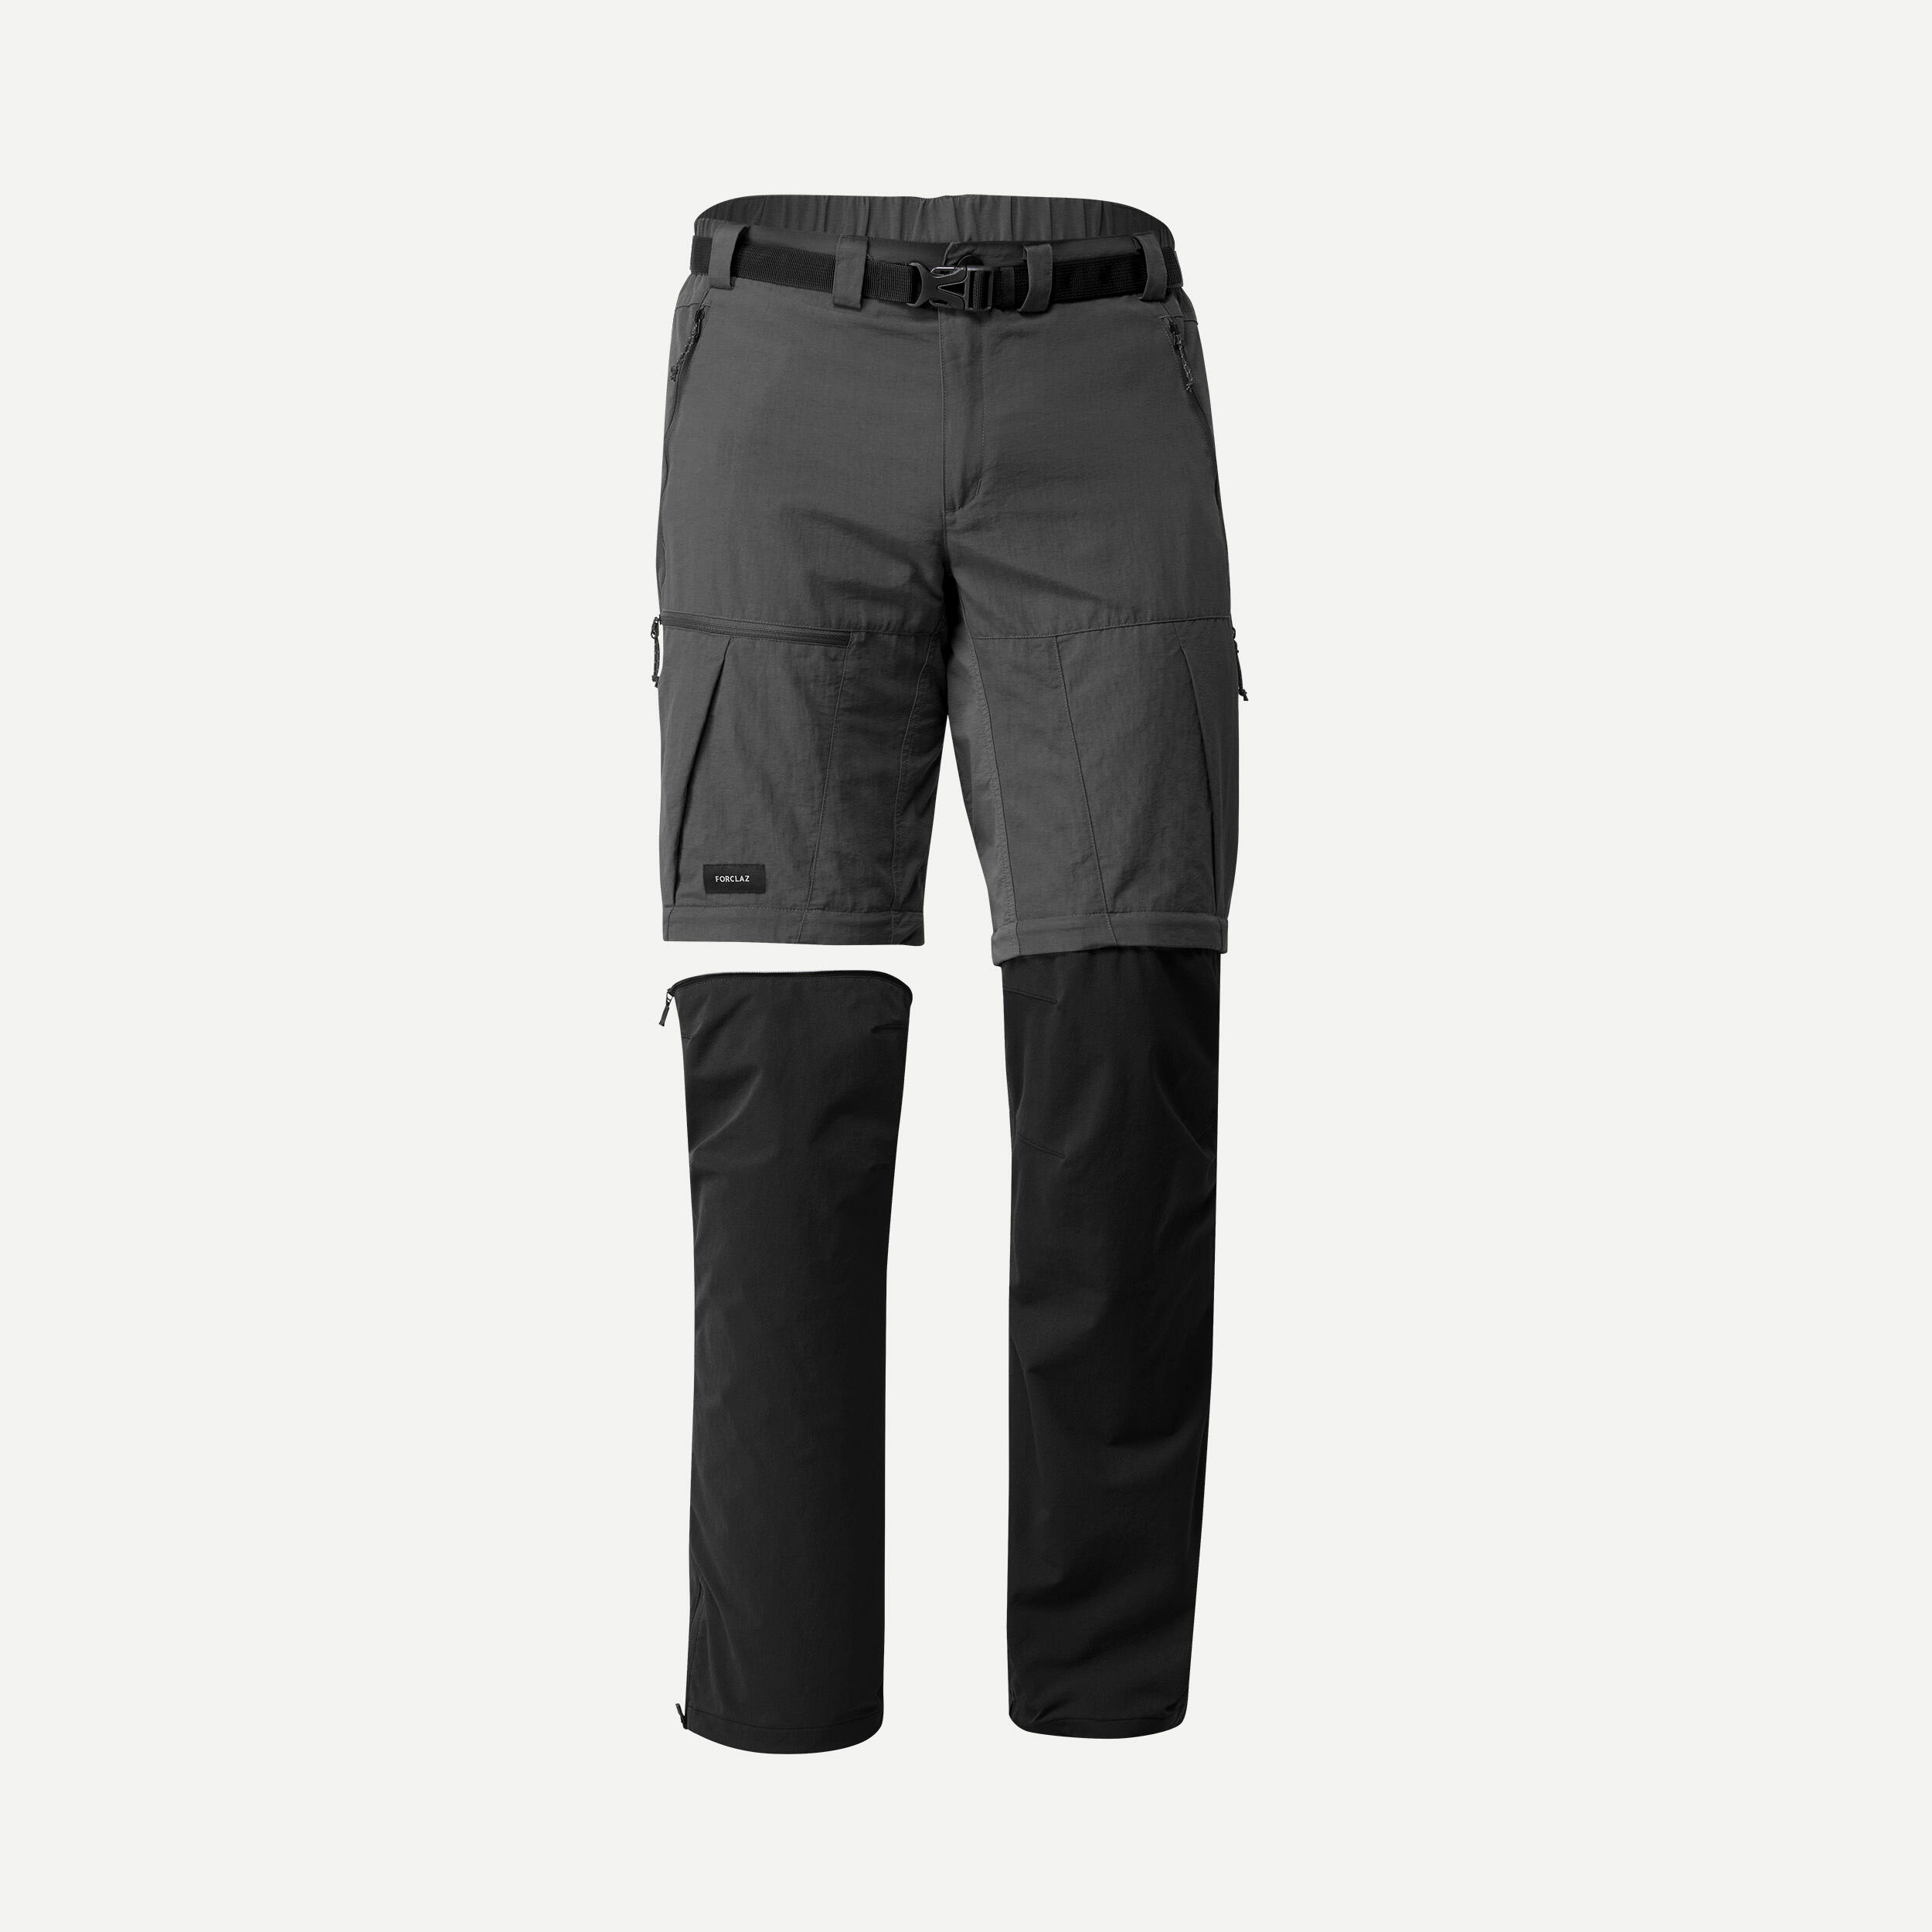 Synthetic Khaki Forclaz Trek 500 Womens Mountain Trekking Trousers Size  12 m